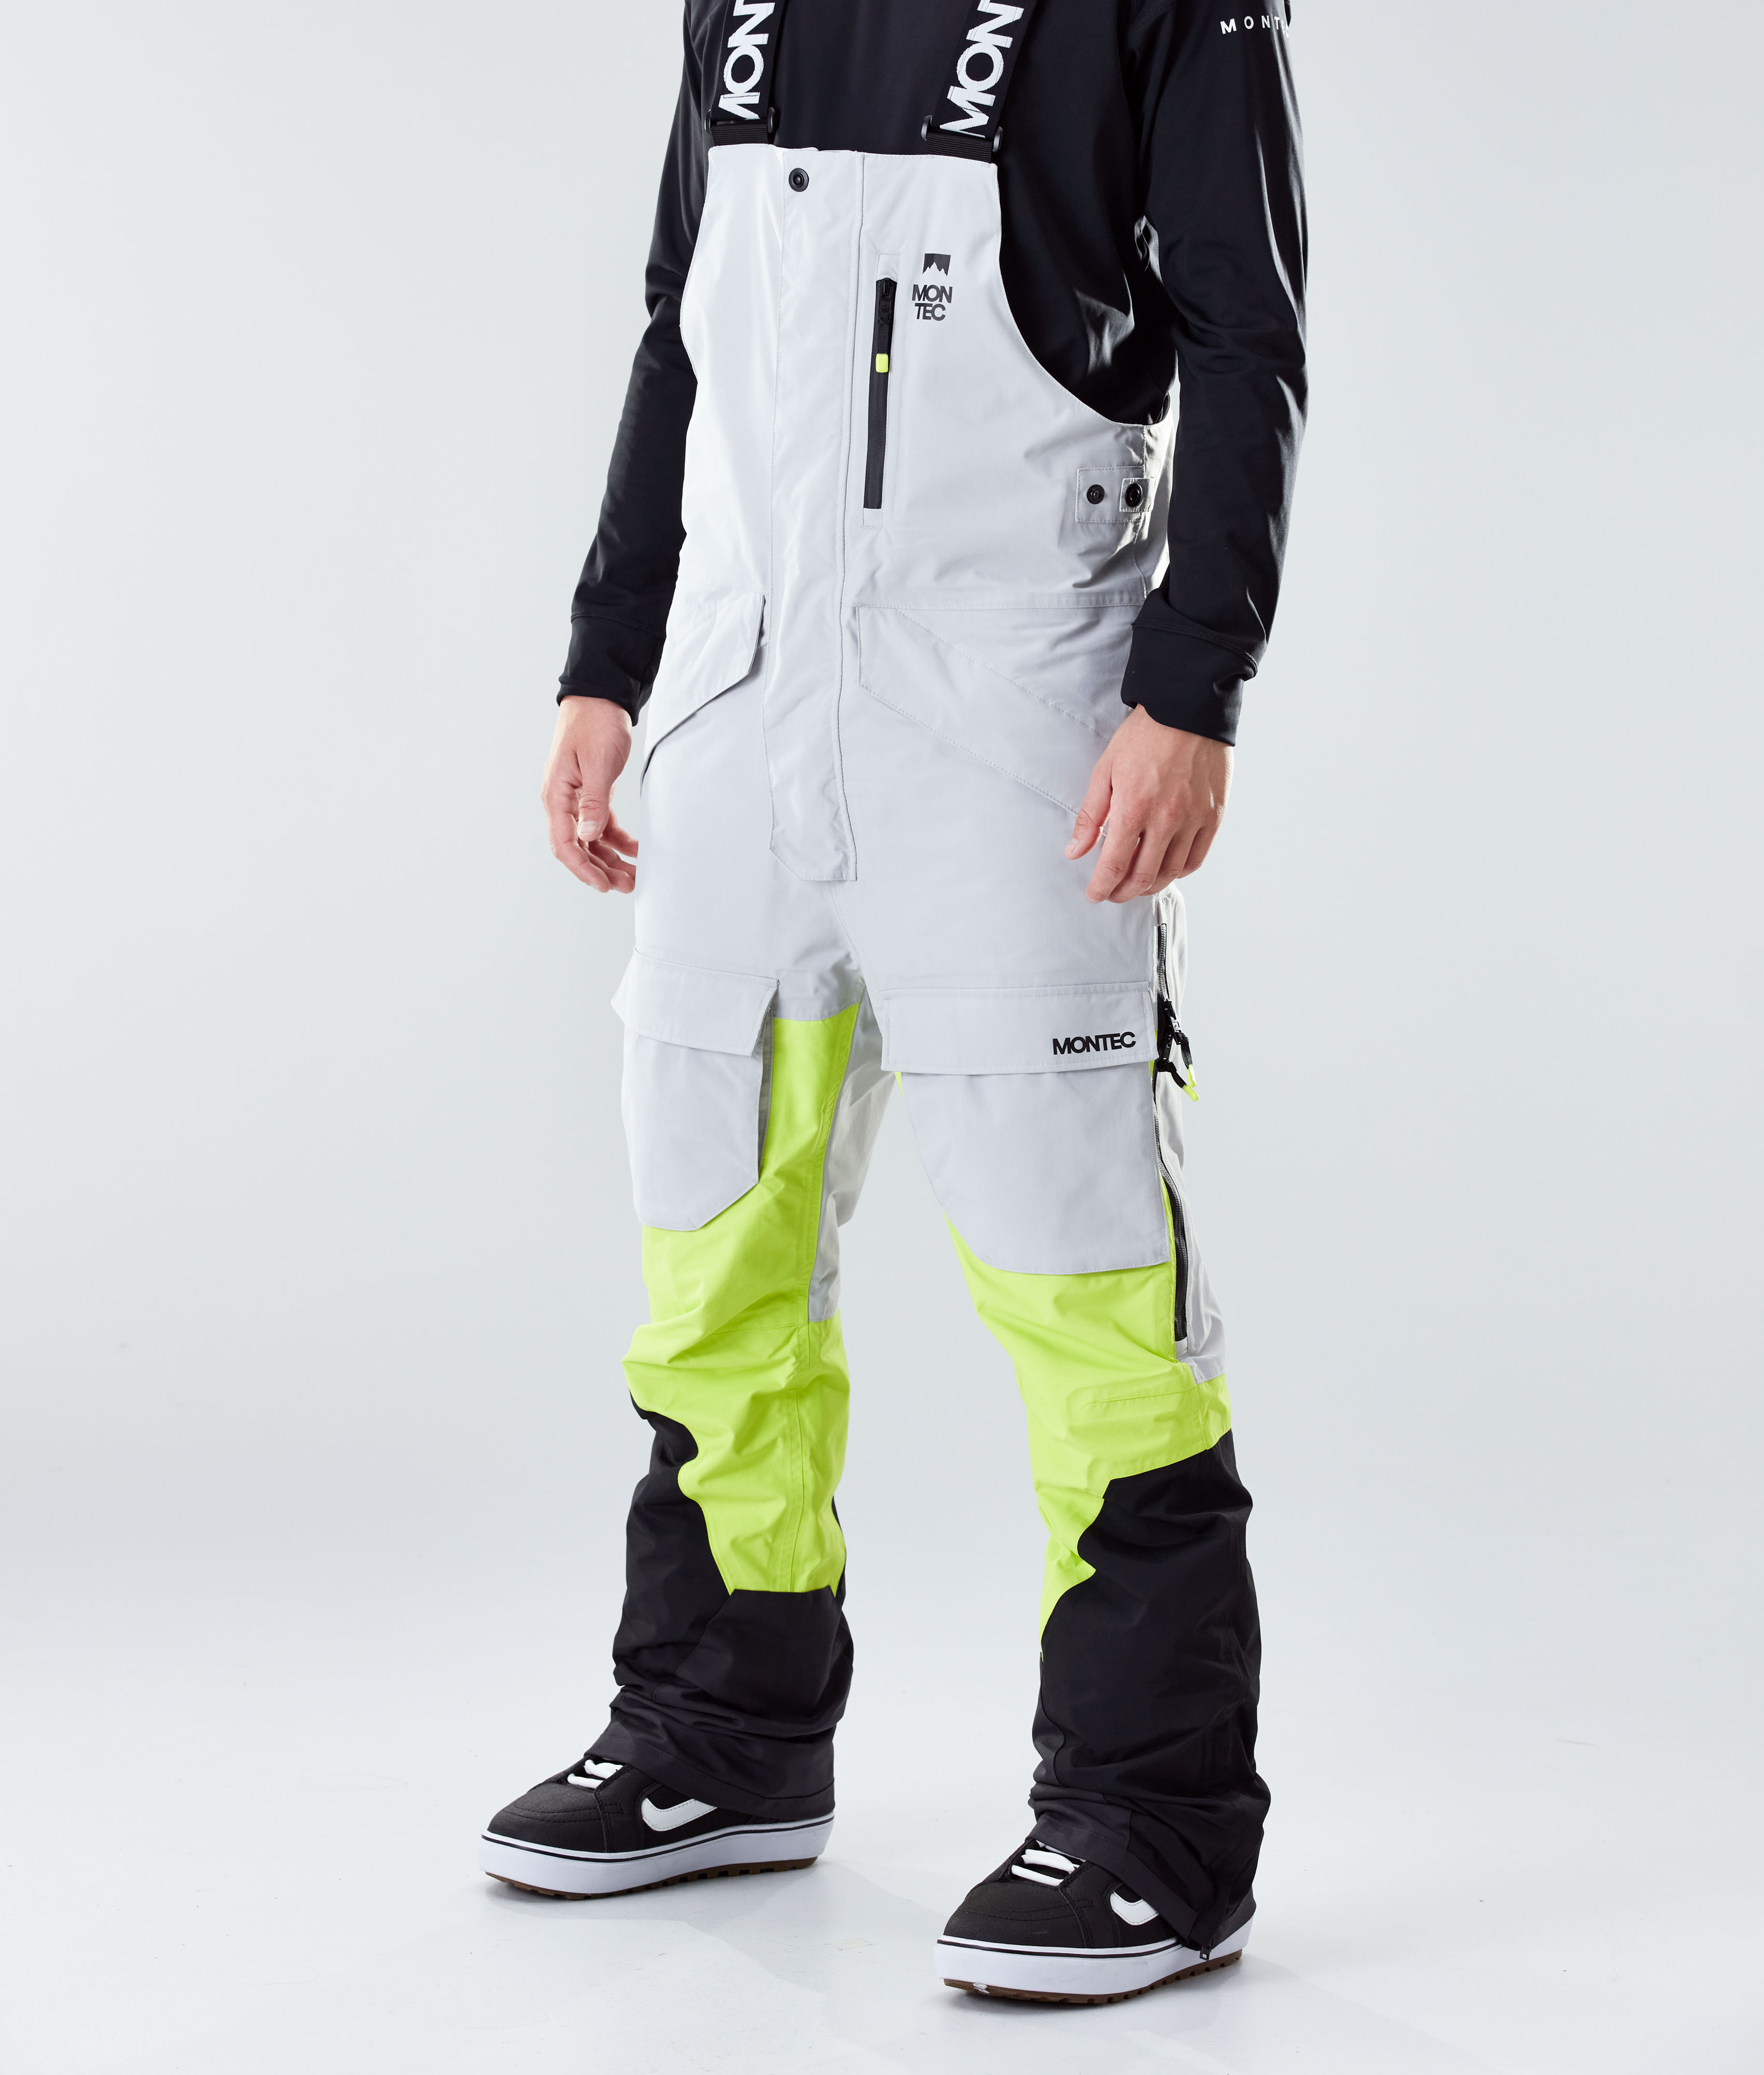 Spyder Men's Fully Insulated Full Side Zip Bib Ski Pants Size Medium -  Large | eBay